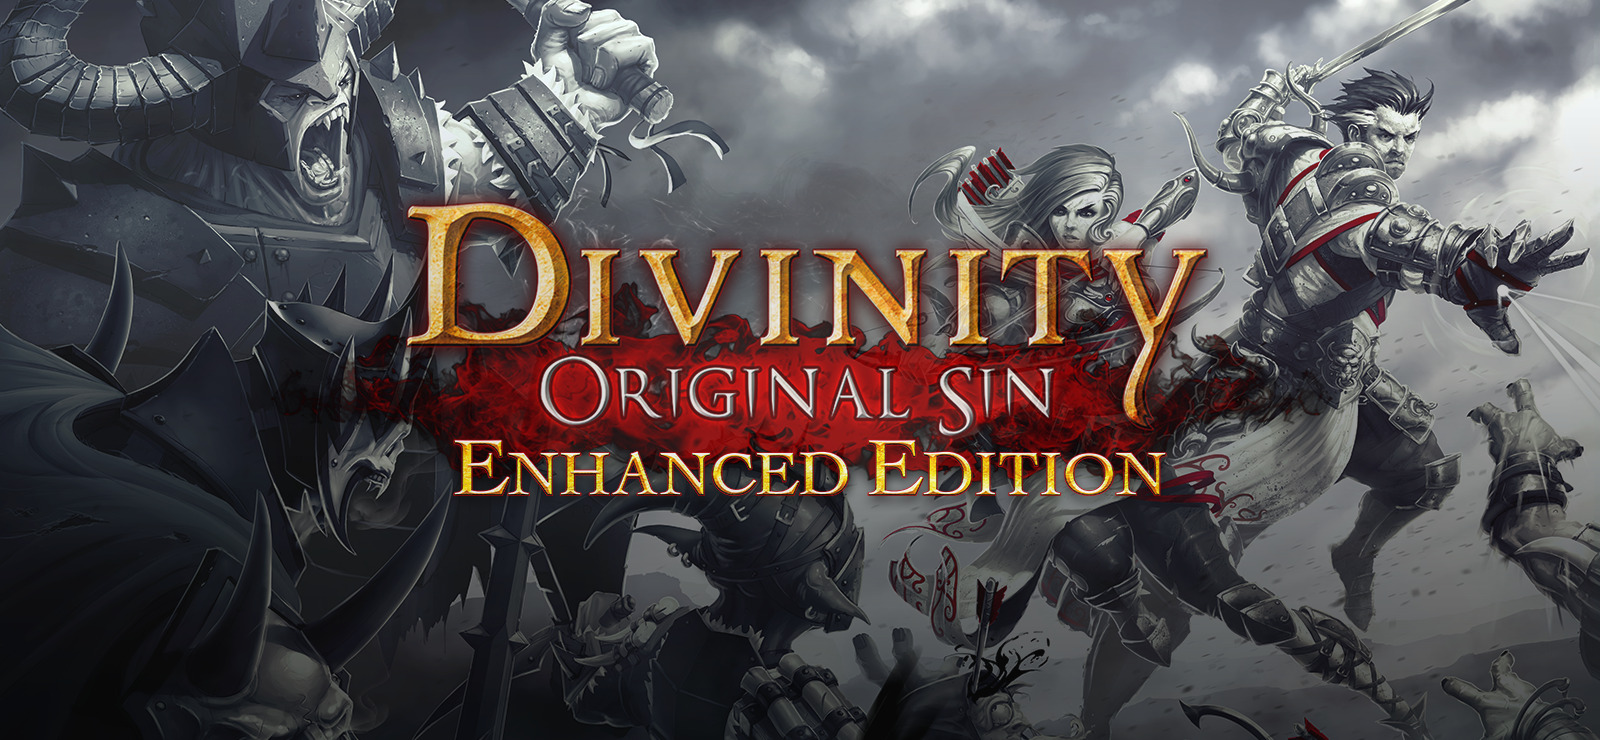 divinity-original-sin-enhanced-edition-free-download-gametrex